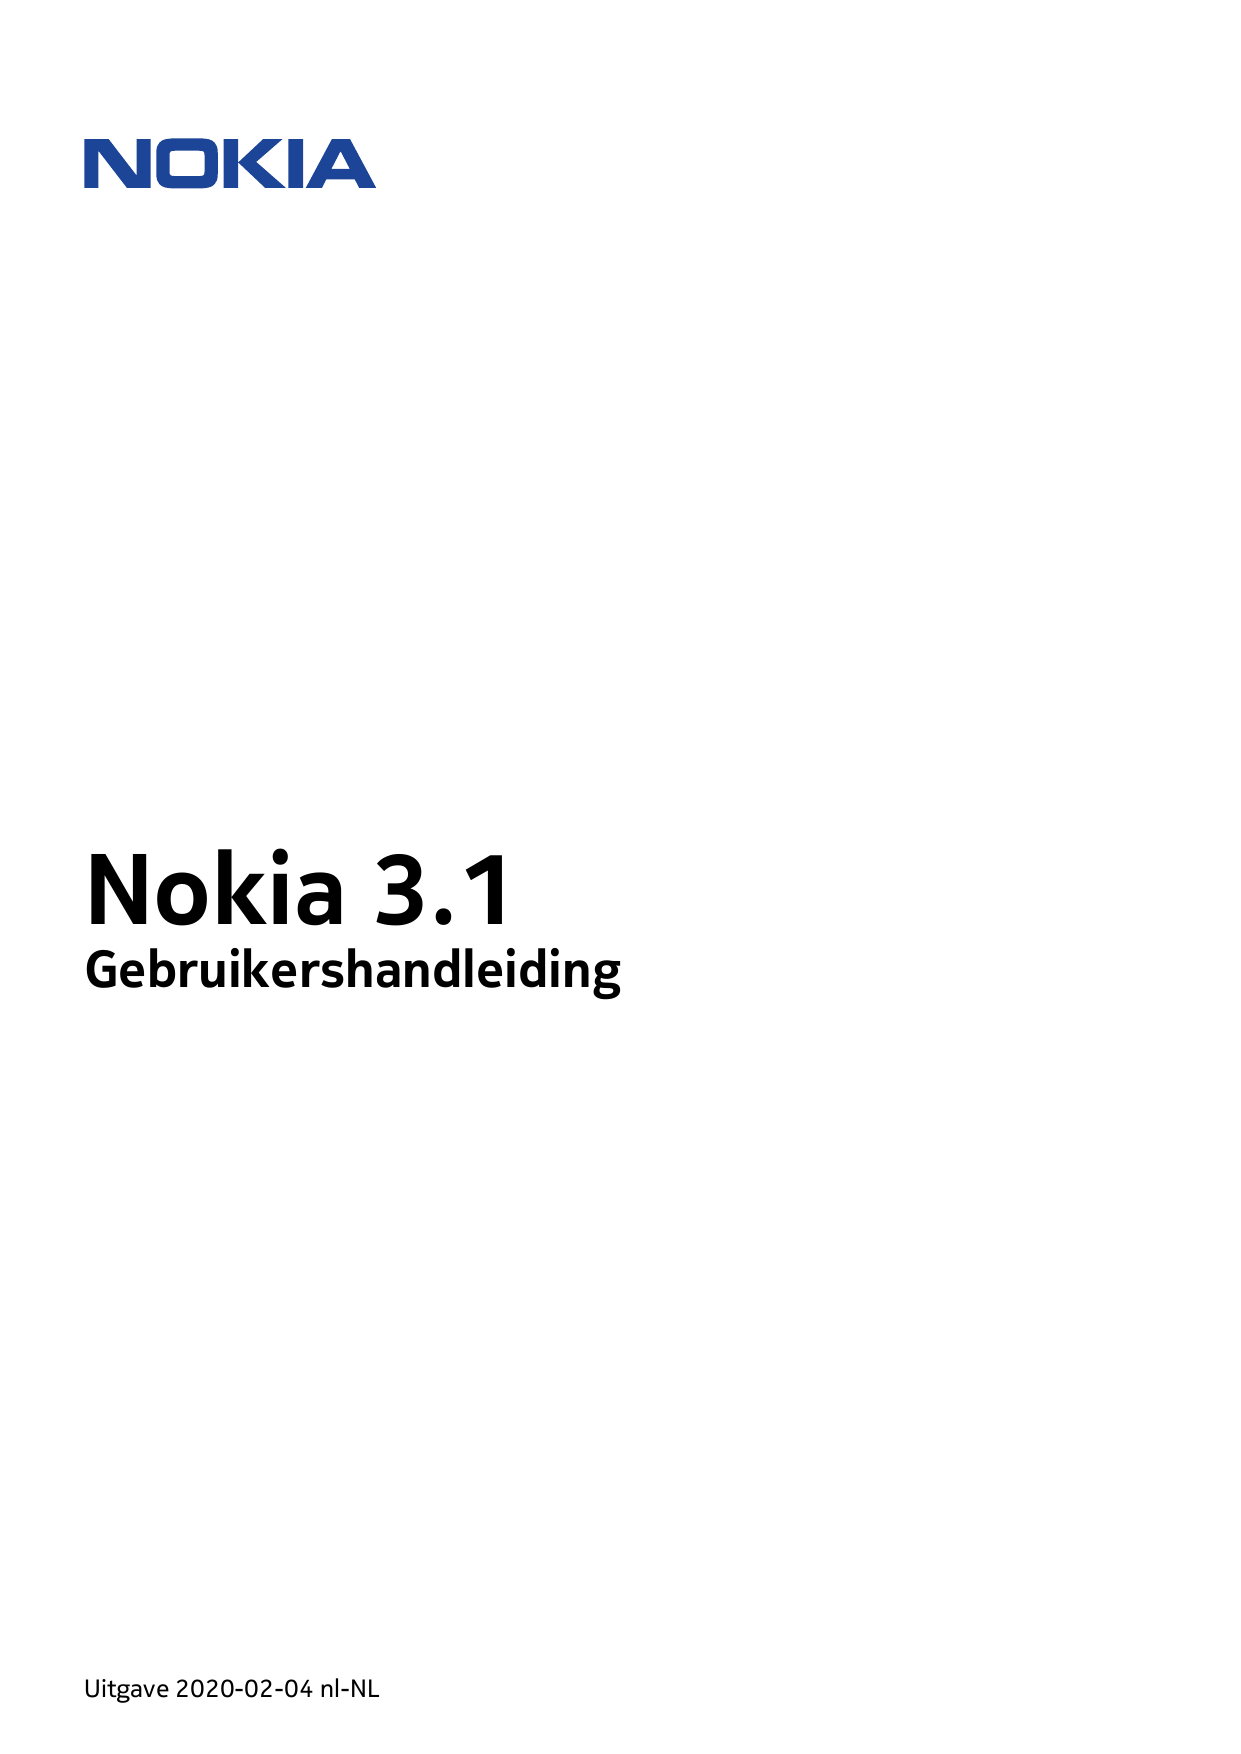 Nokia 3.1GebruikershandleidingUitgave 2020-02-04 nl-NL